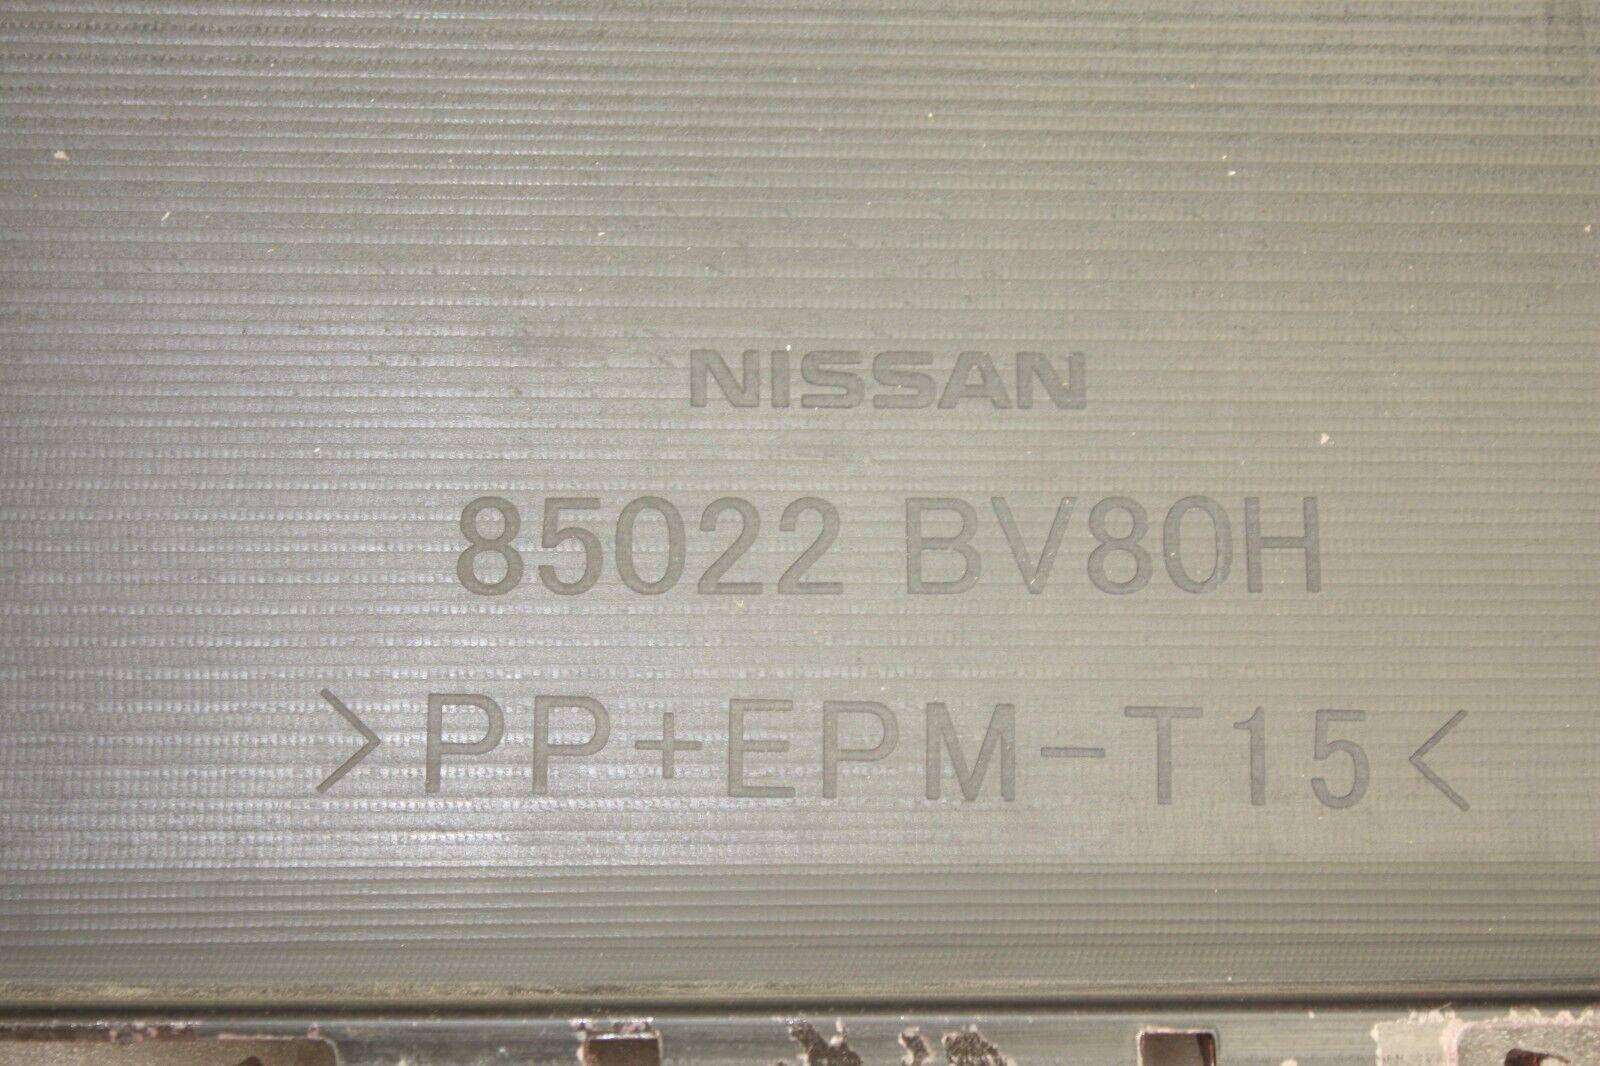 Nissan-Juke-F15-Rear-Bumper-2014-TO-2019-85022-BV80H-Genuine-176333478248-10